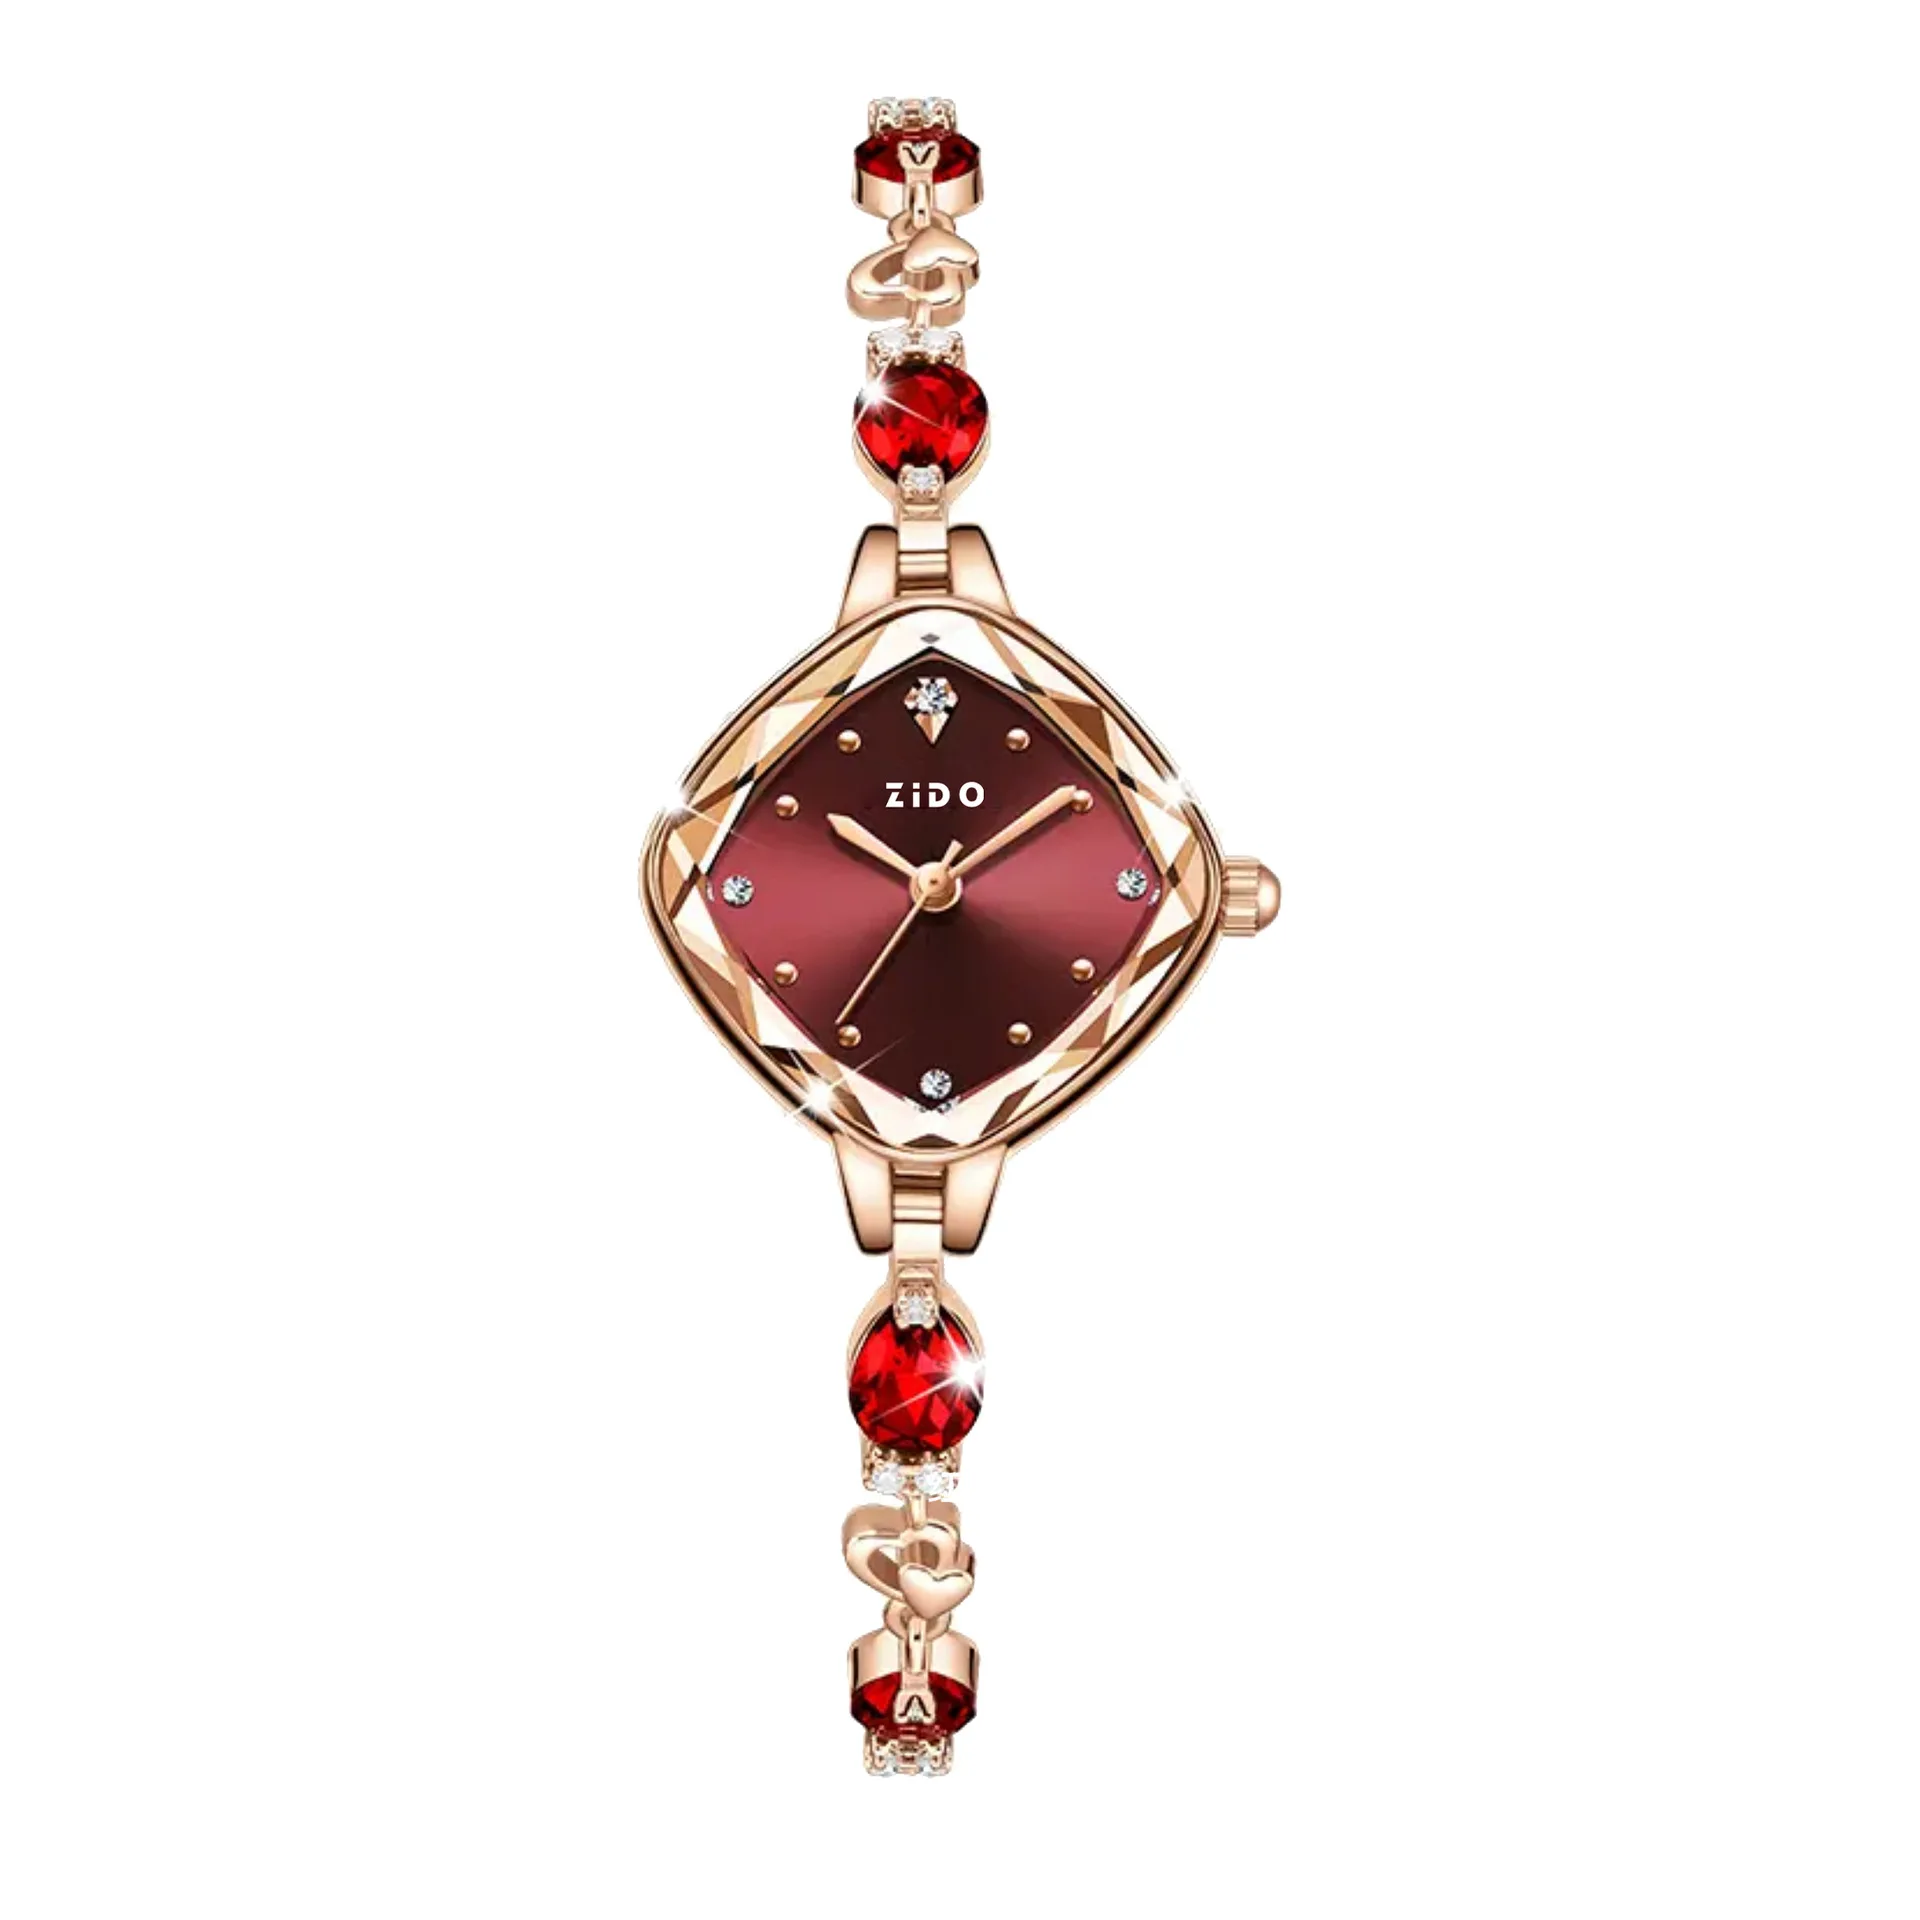 Women's Watch Brand Red High Beauty Luxury Crystal Diamond Metal Bracelet Waterproof Diamond Female Fashion Clock Watches gift